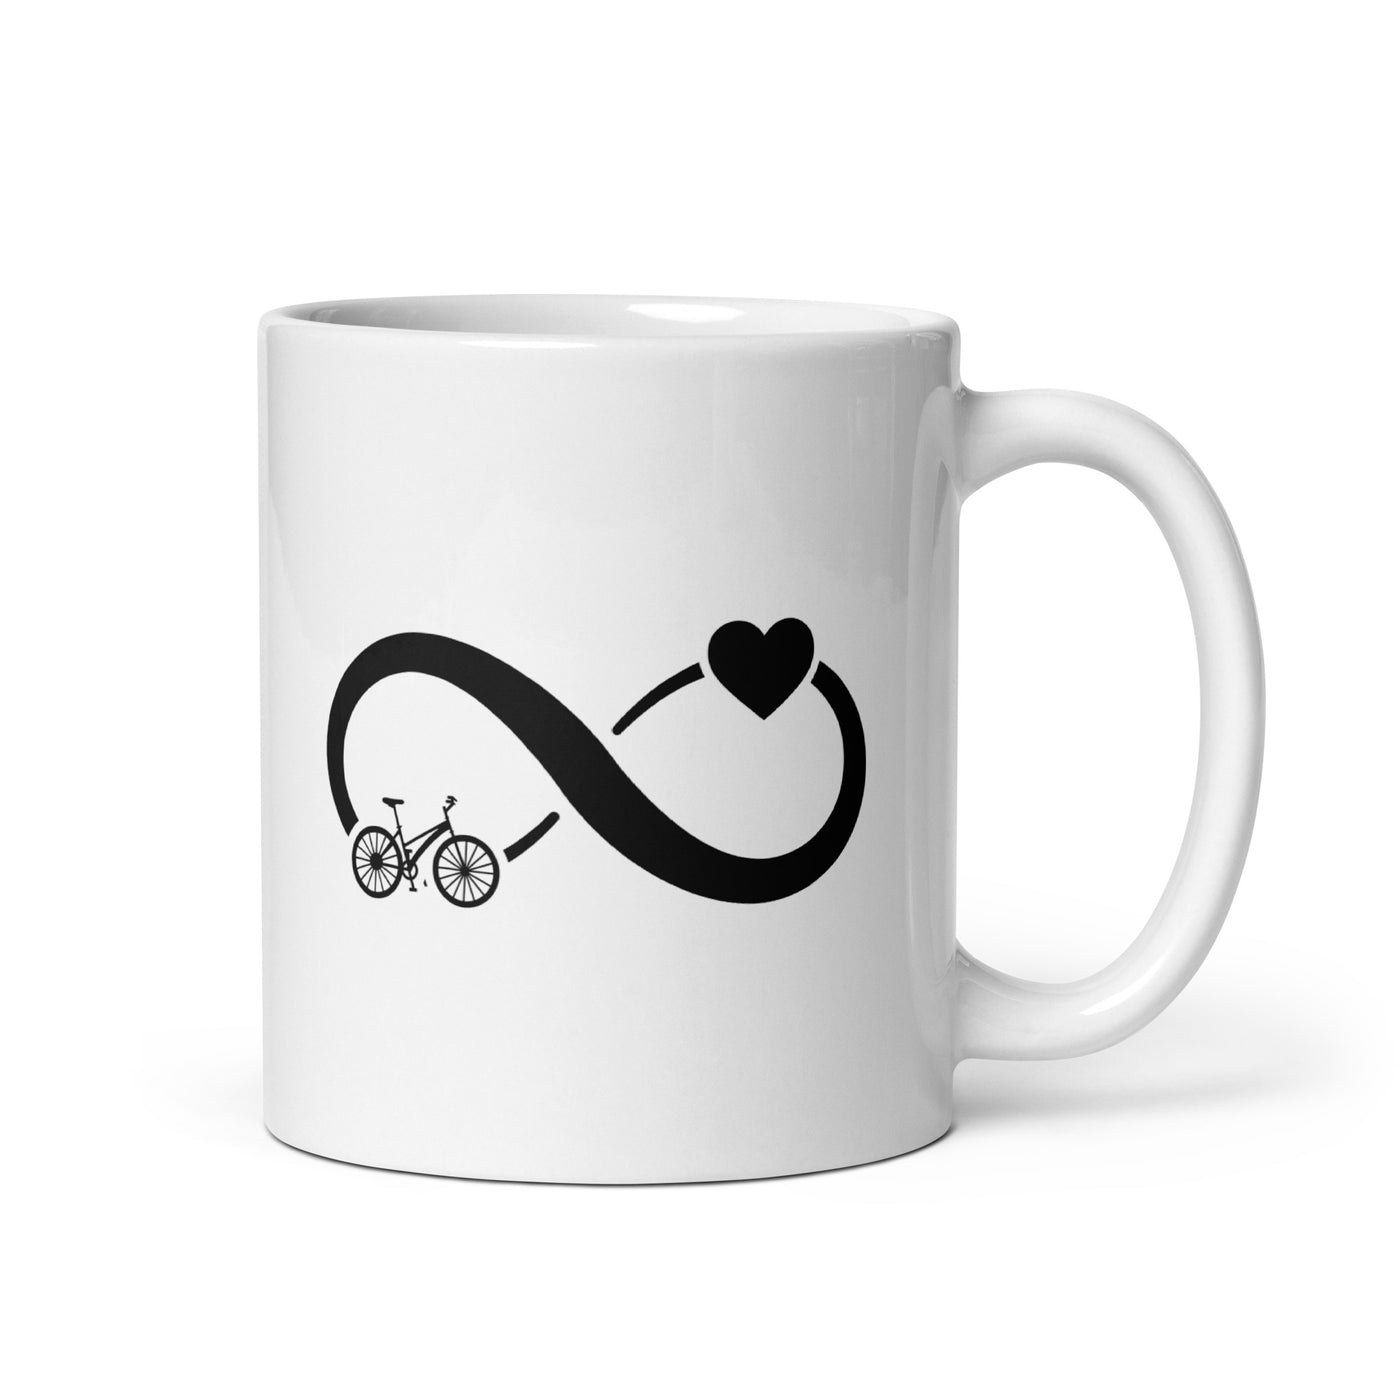 Infinity Heart And Cycling - Tasse fahrrad